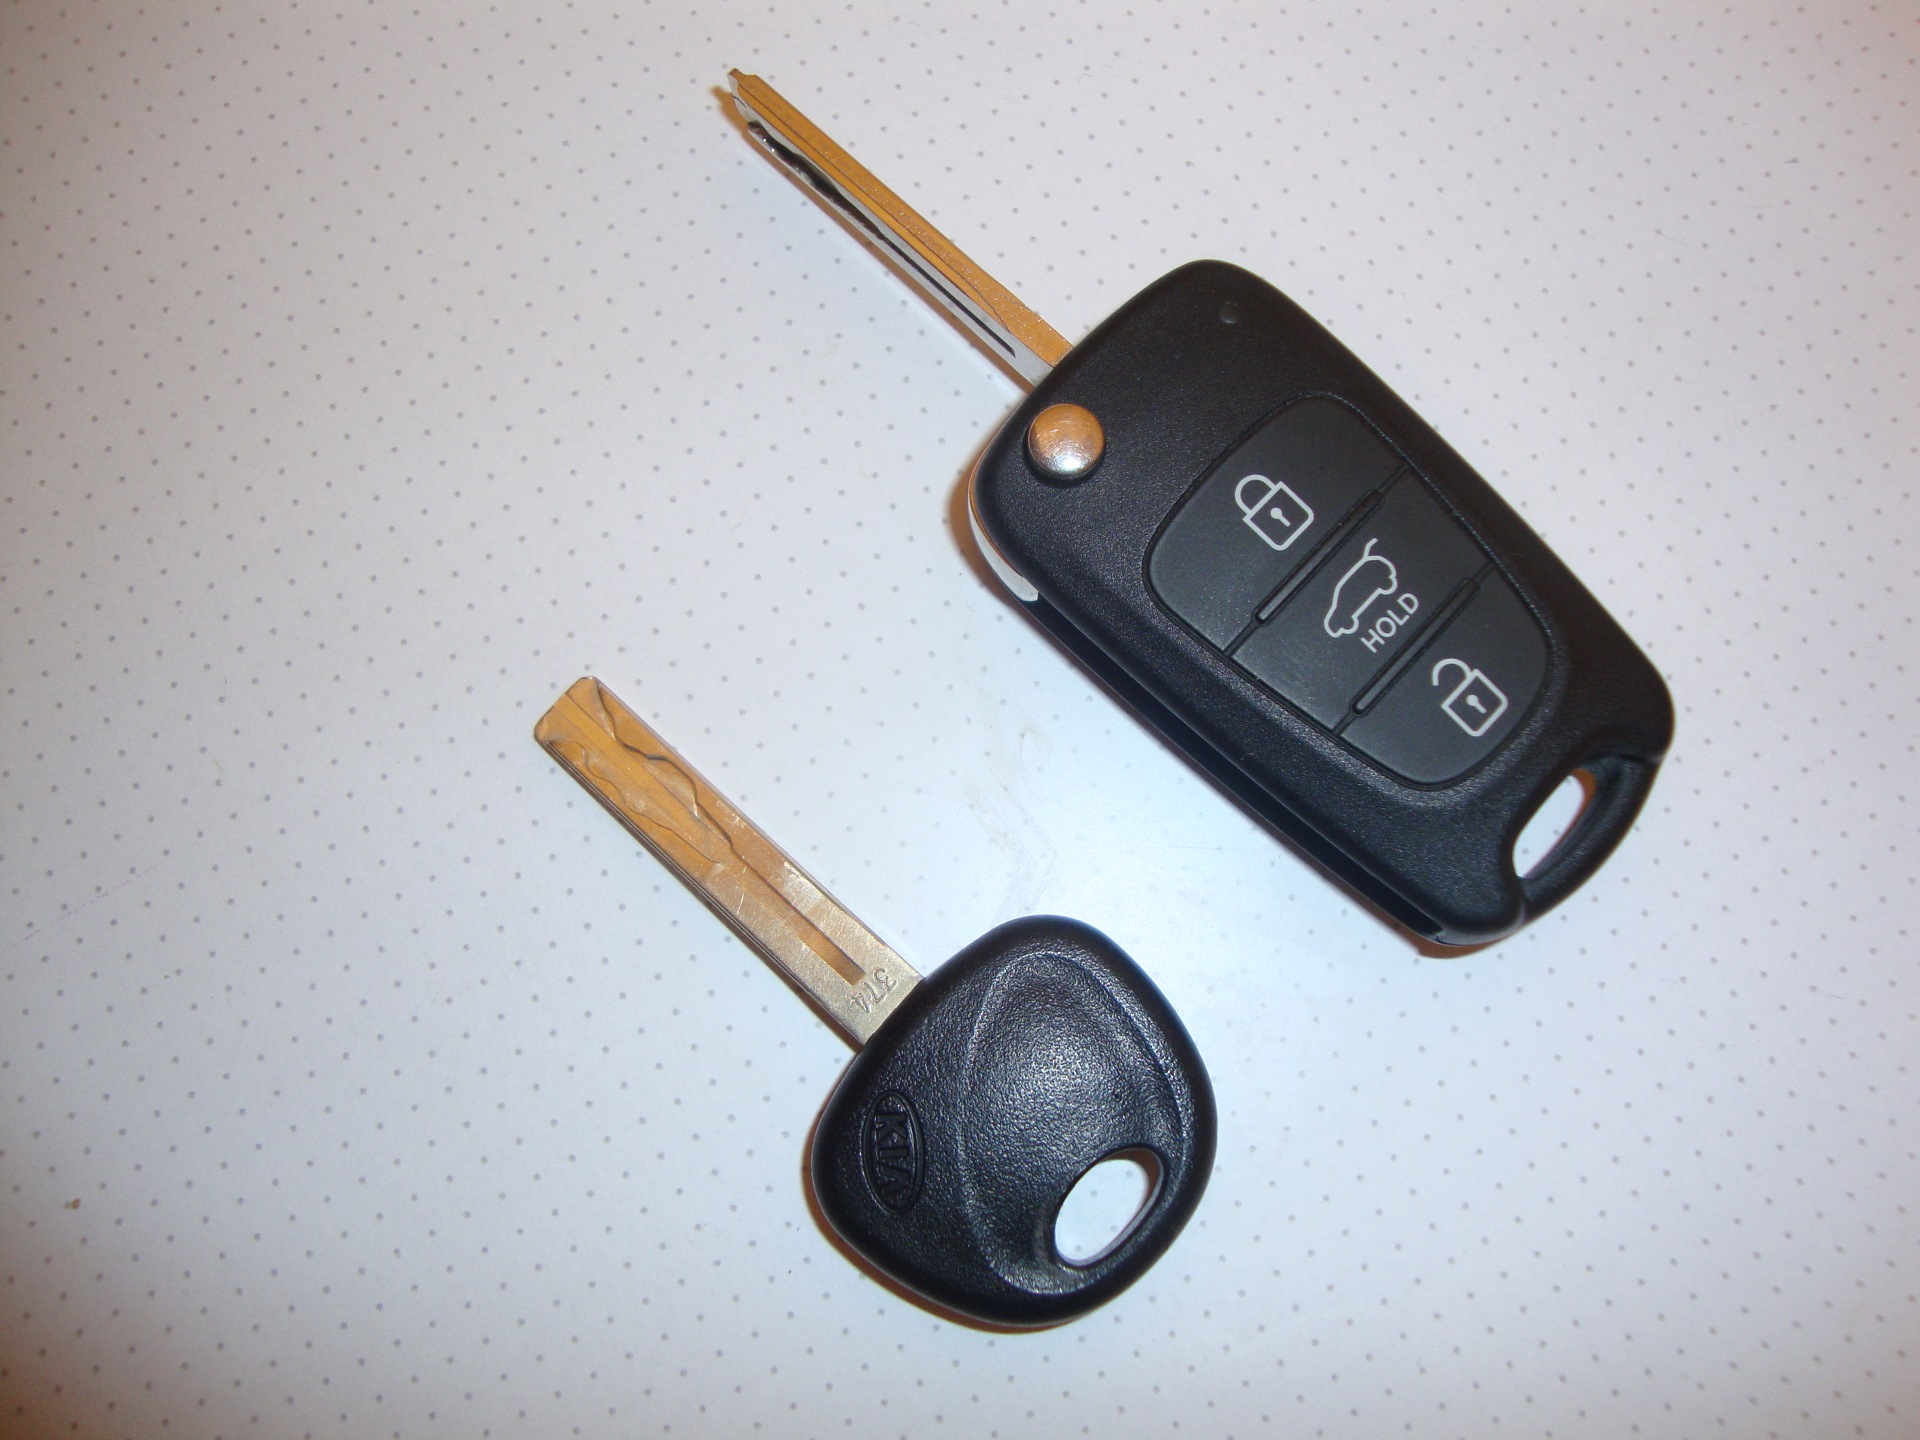 Rio ключ. Kia Rio 2 ключ 2011. Кия СИД 2010 ключ зажигания. Kia Ceed 2020 ключ замка. Комплект ключей на Киа СИД 2010.